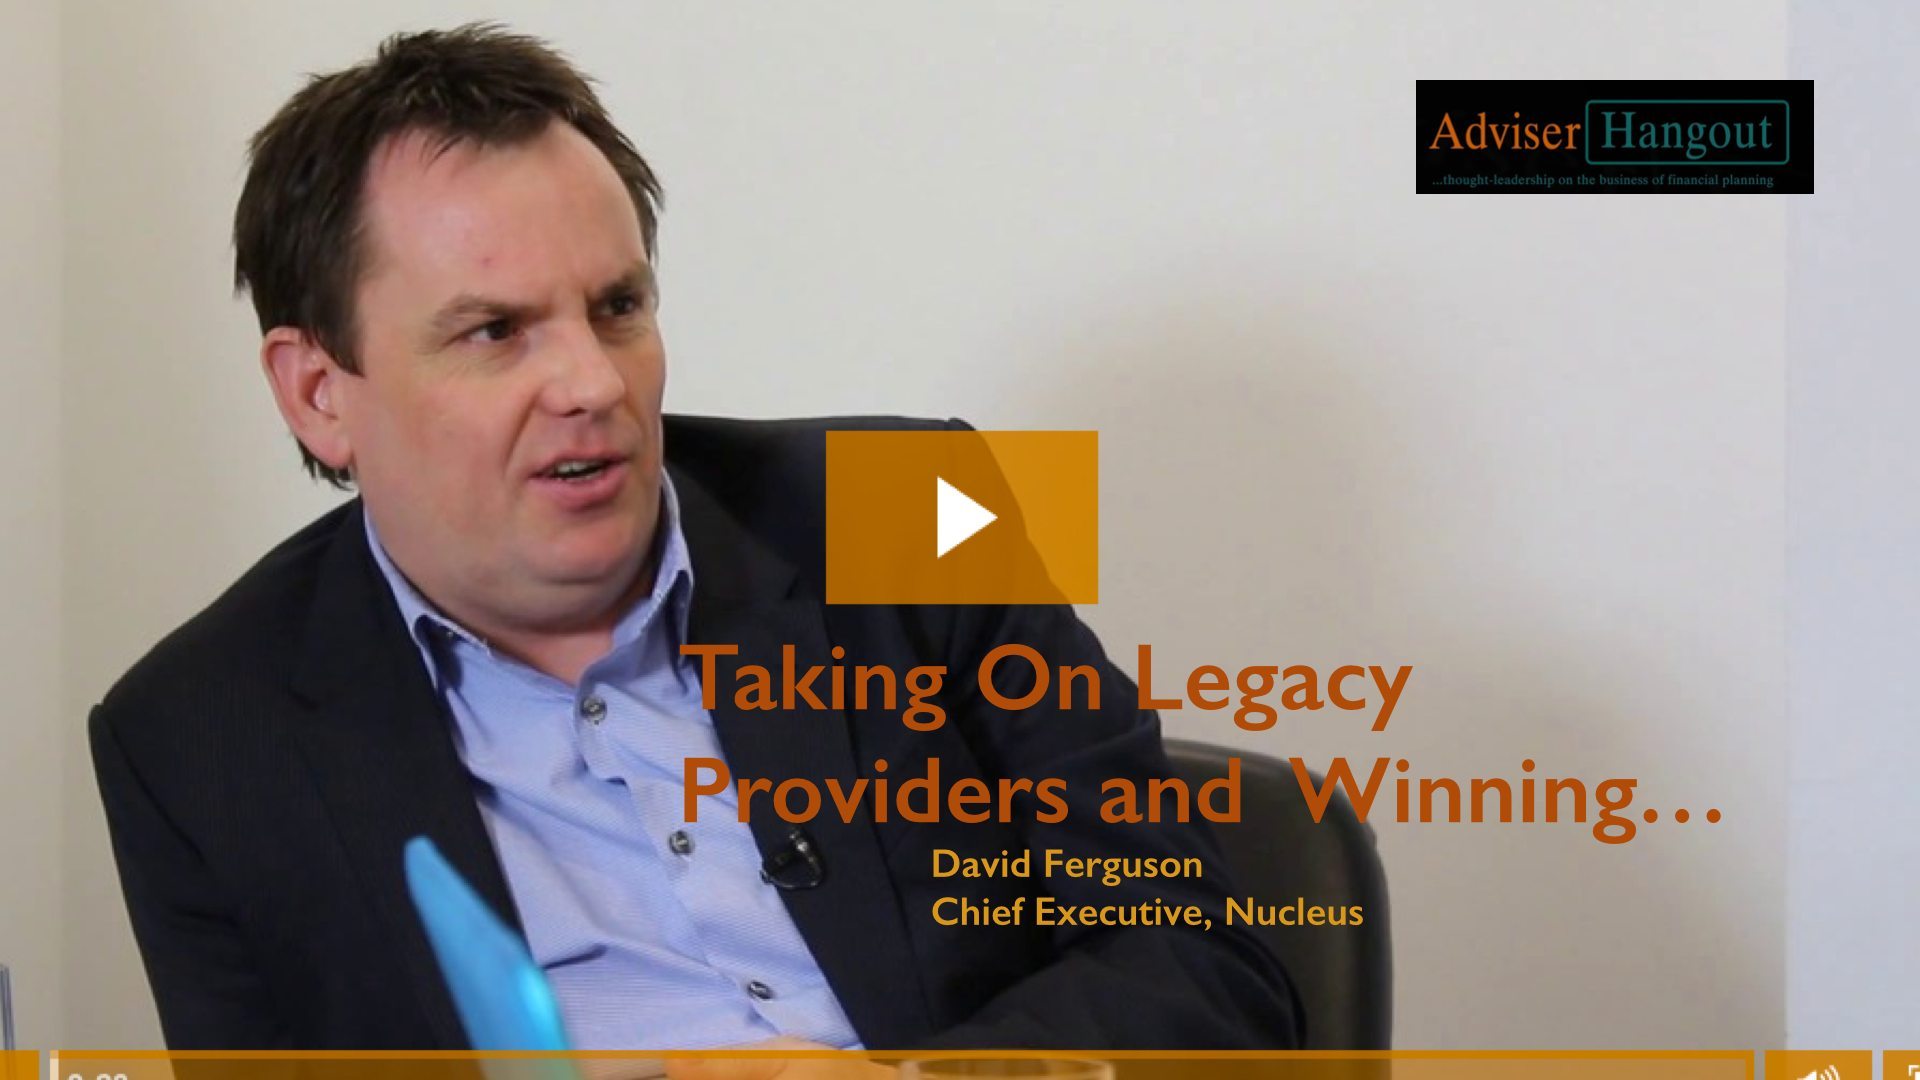 David Ferguson: Taking On Legacy Providers and Winning